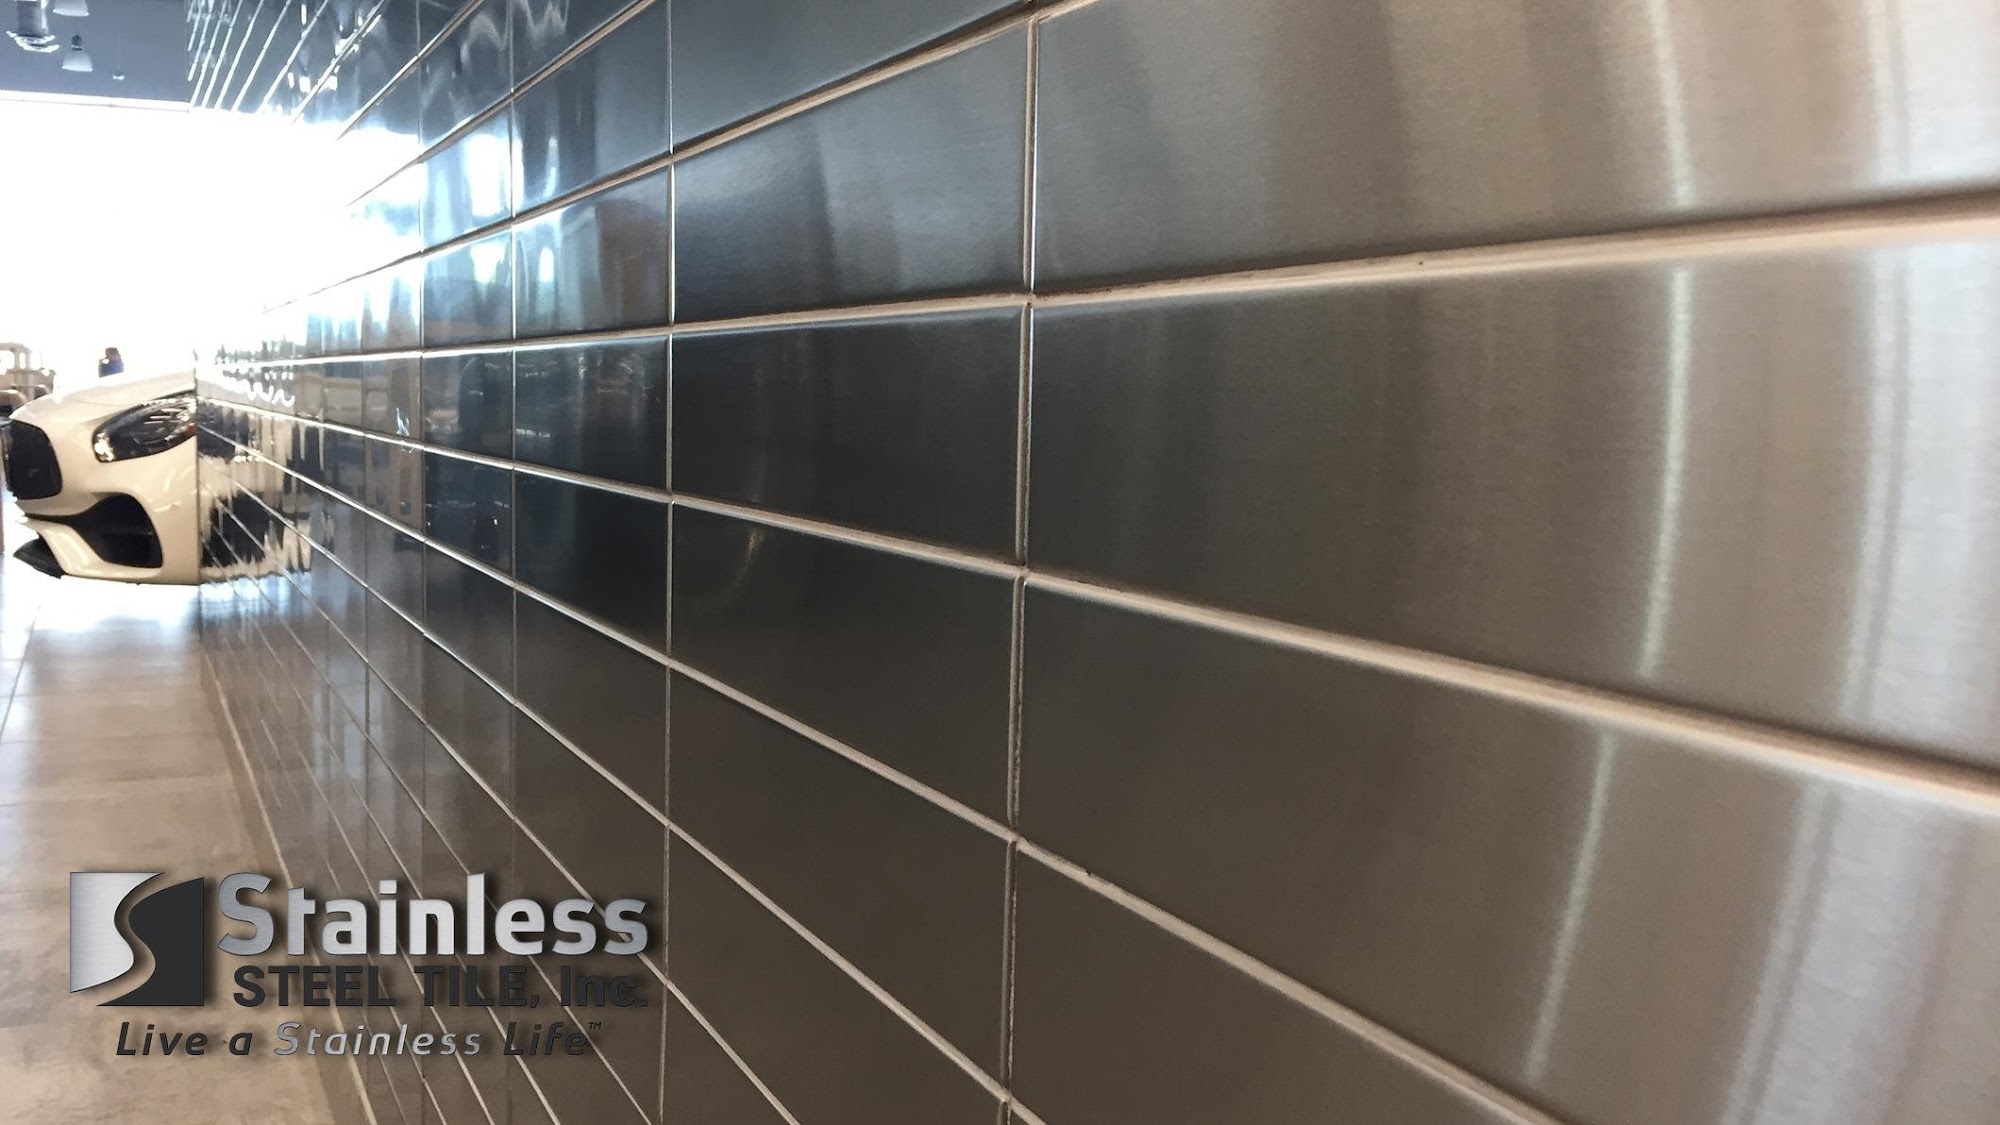 Stainless Steel Tile